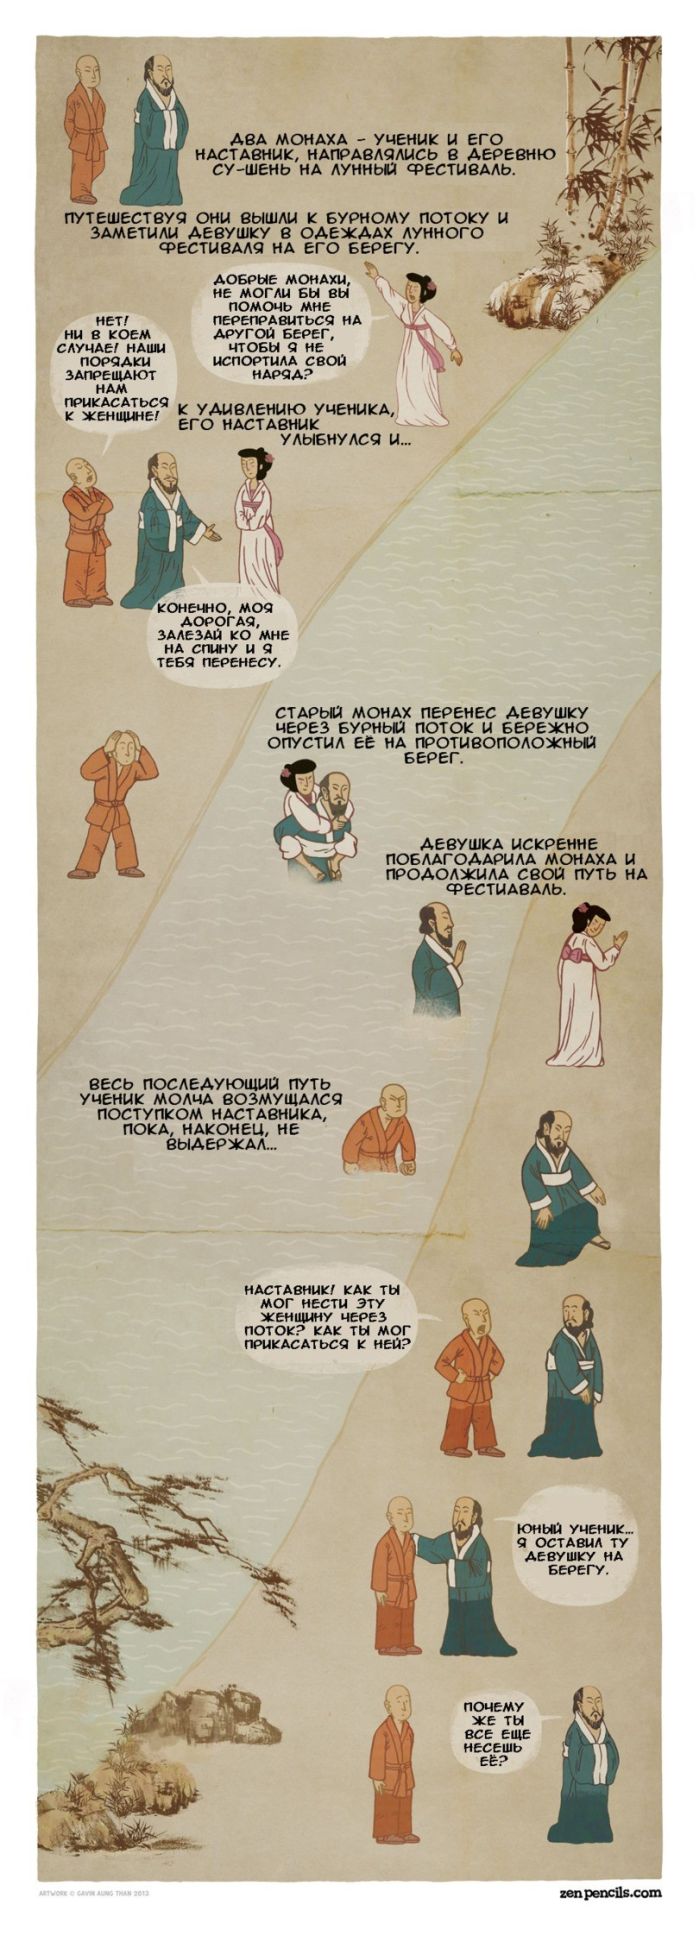 Притча про двух монахов и девушку